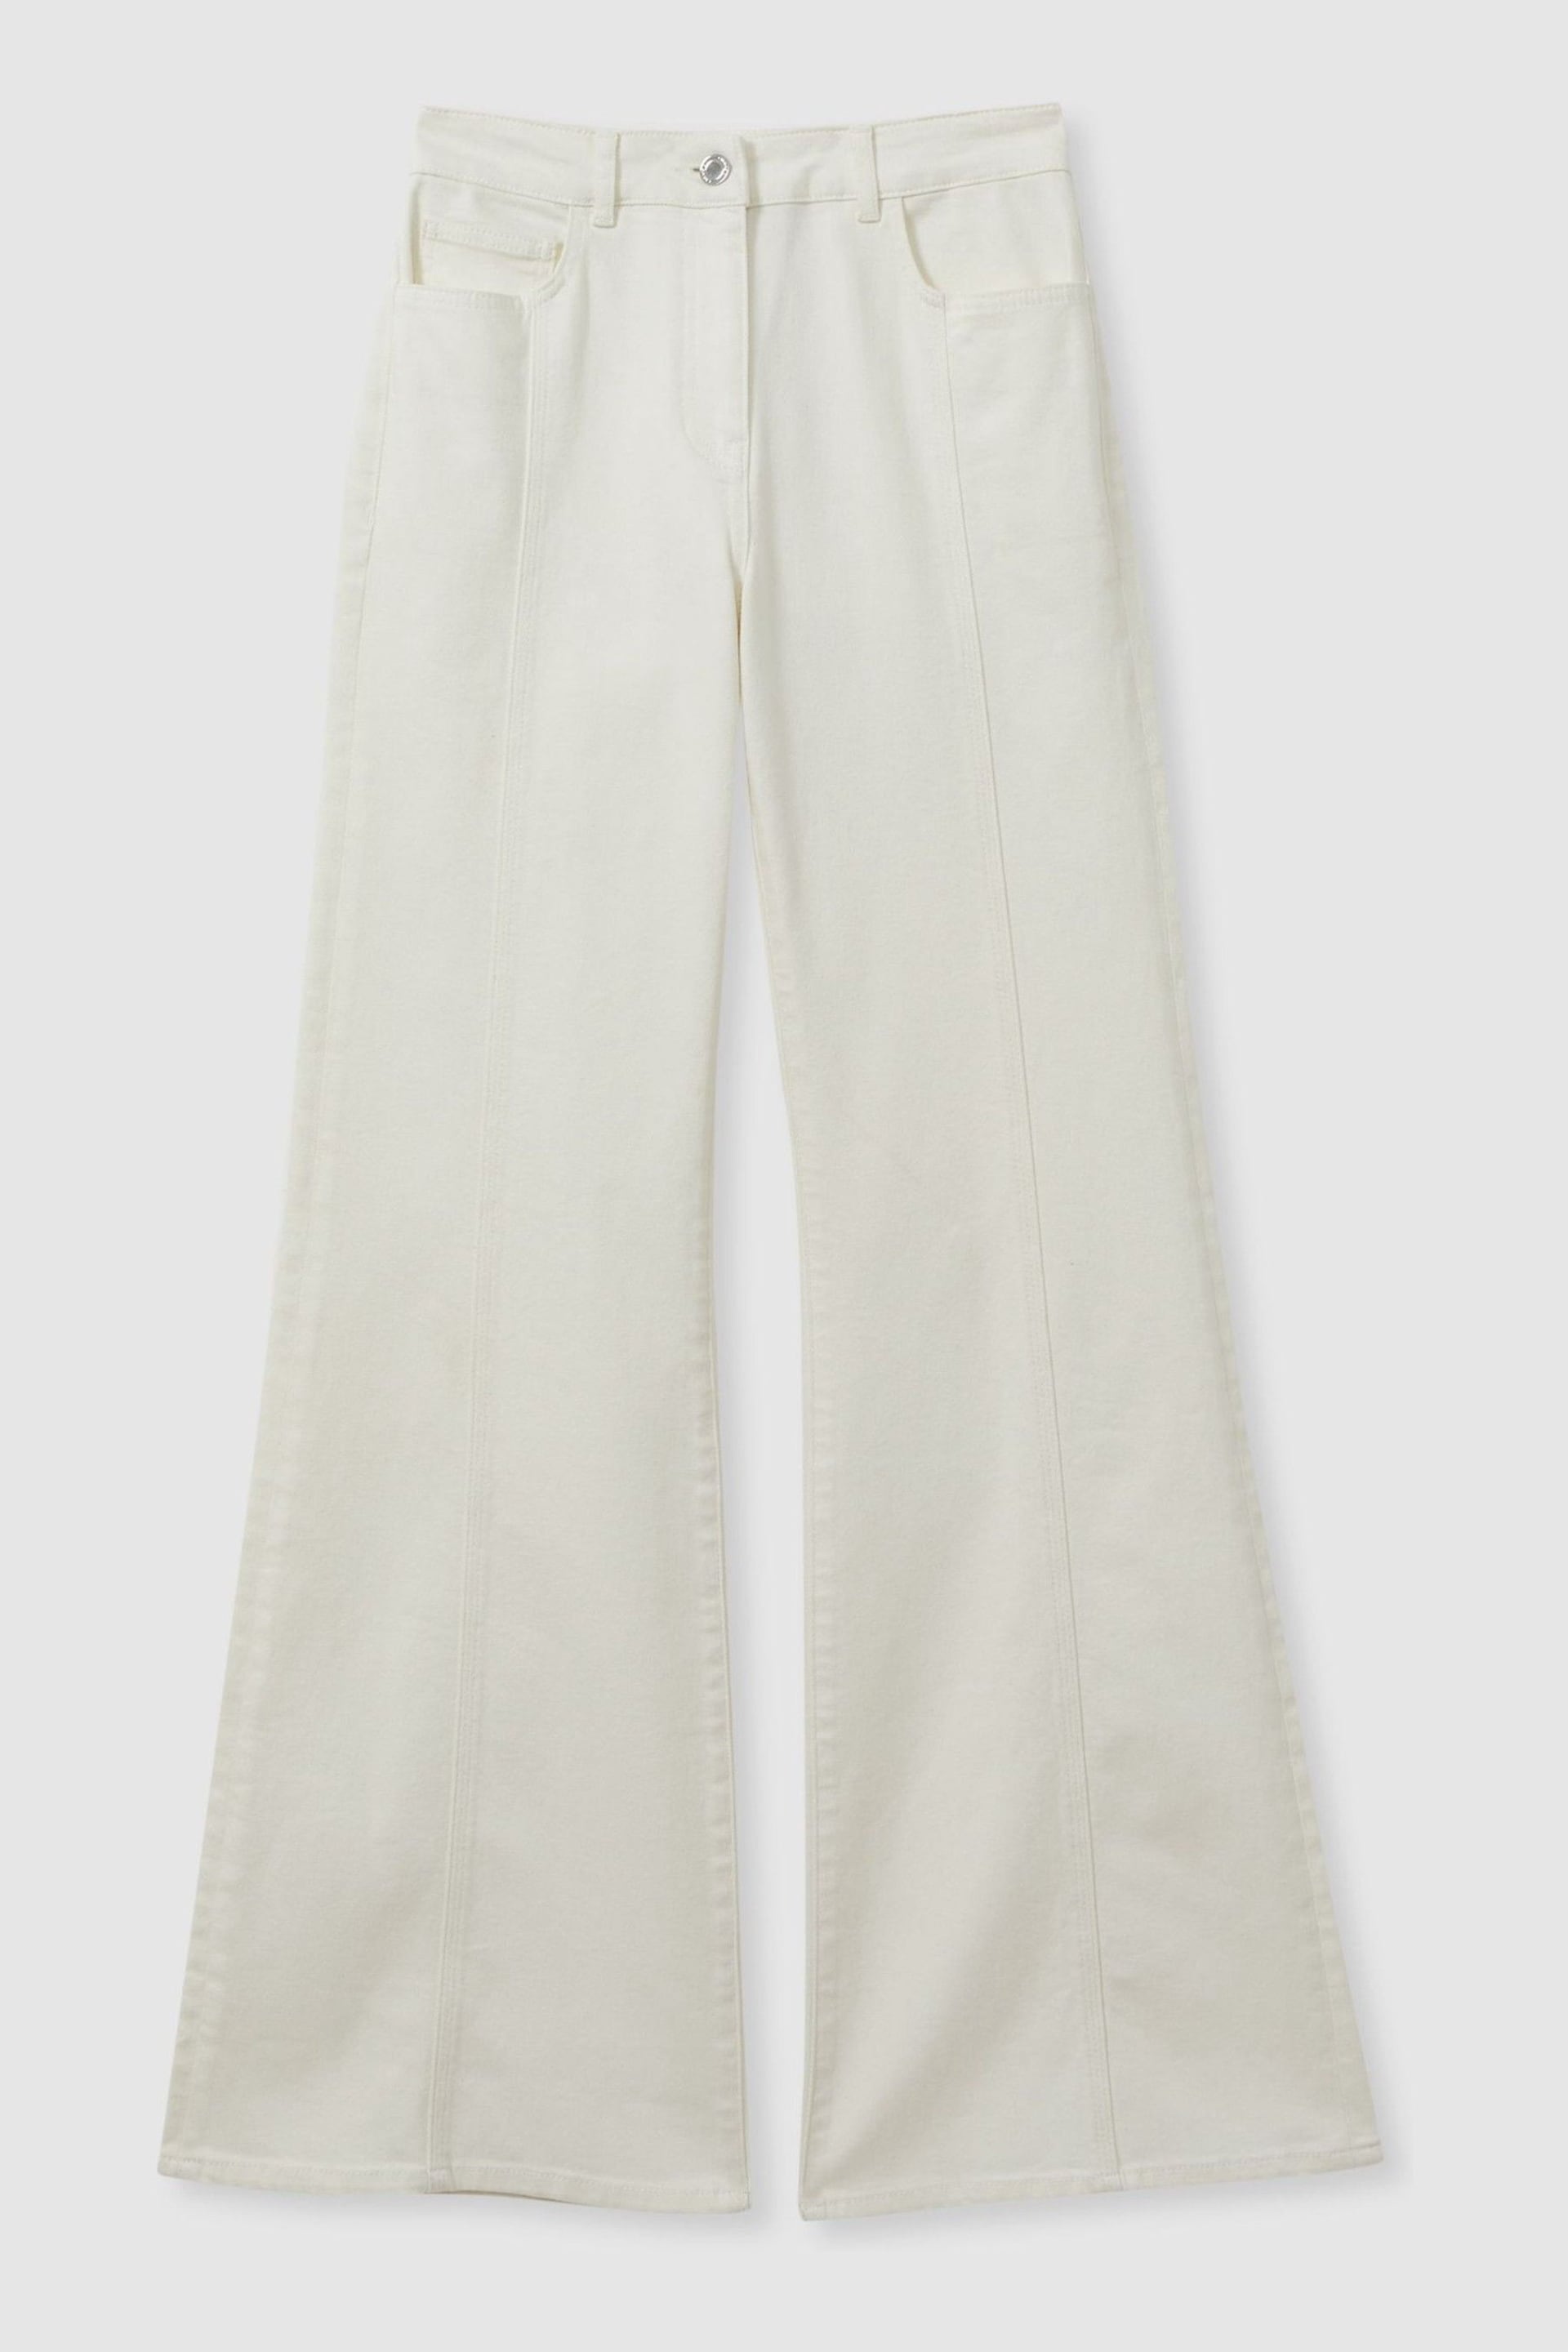 Reiss Ecru Juniper Petite Flared Front Seam Jeans - Image 2 of 6